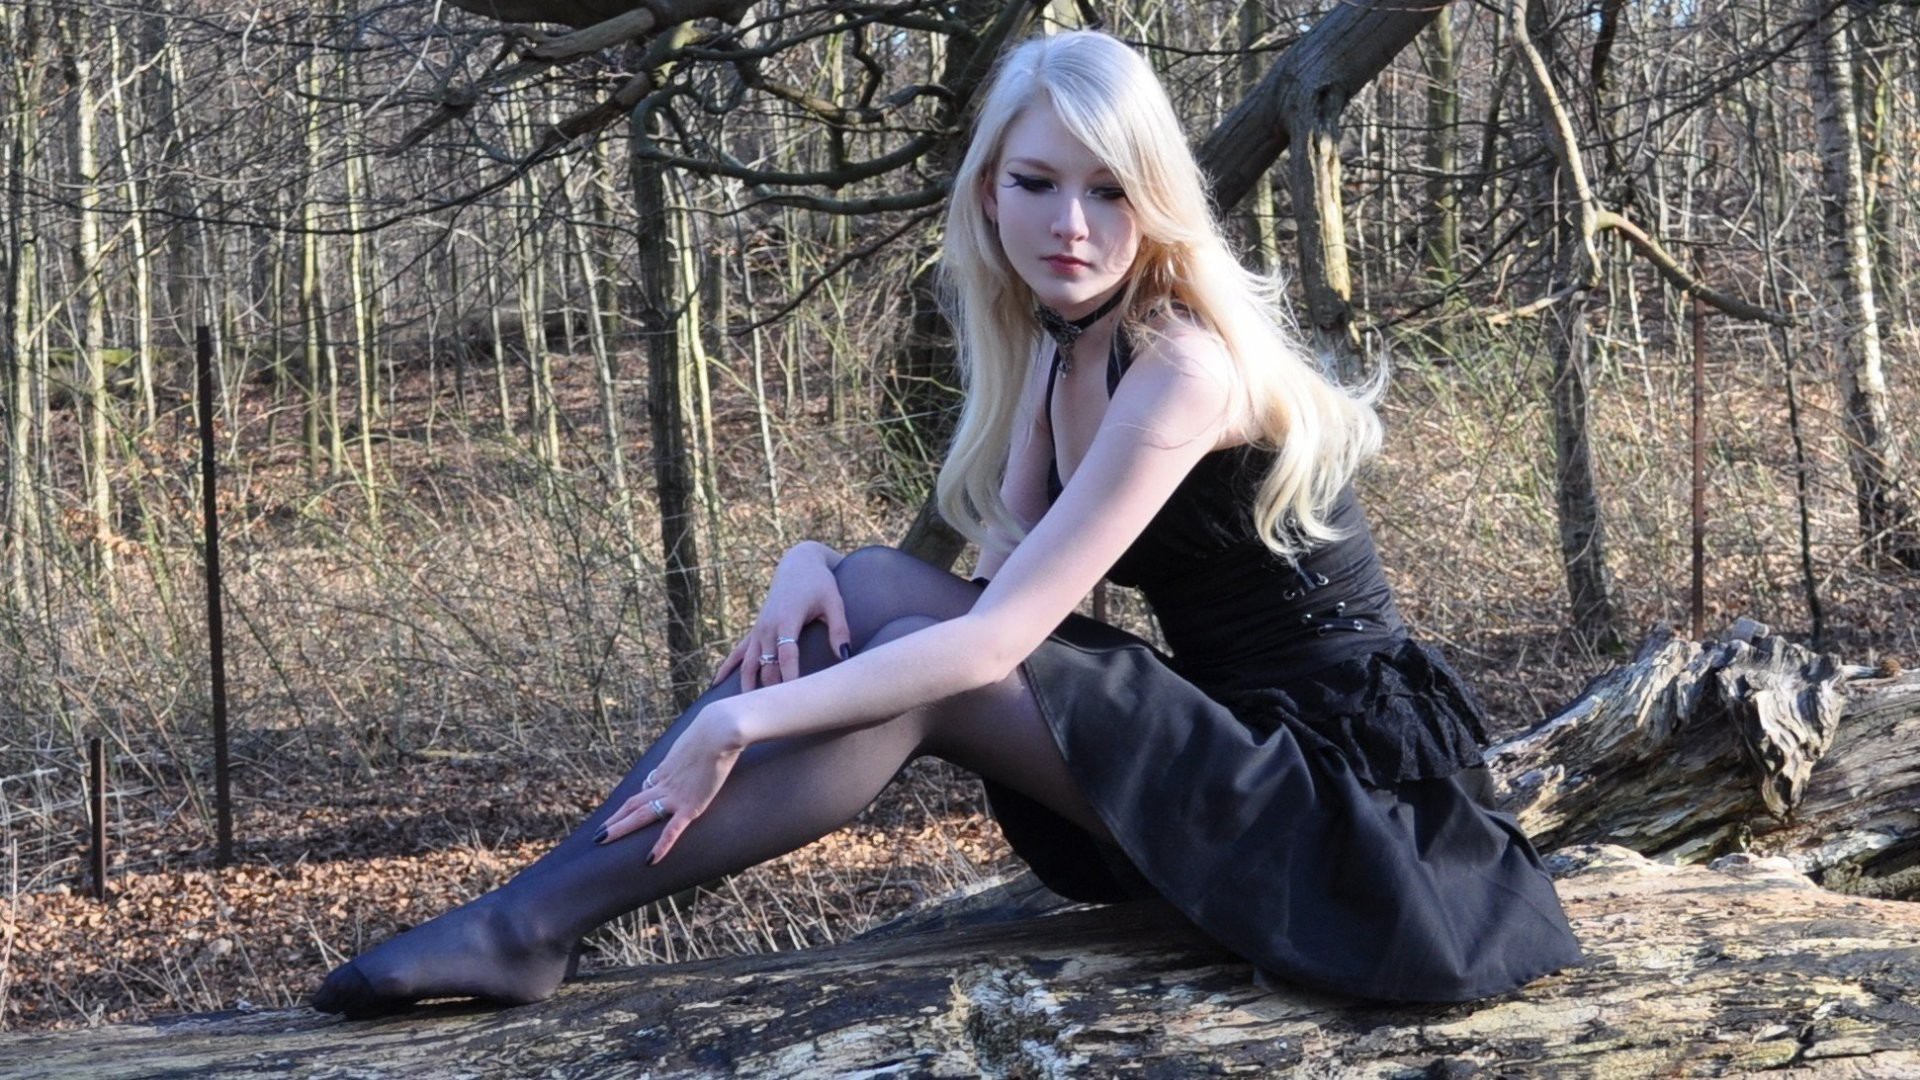 Gothic Blonde Tights Black Dress Black Outfits Sitting Women Women Outdoors Legs Goths Alternative S 1920x1080